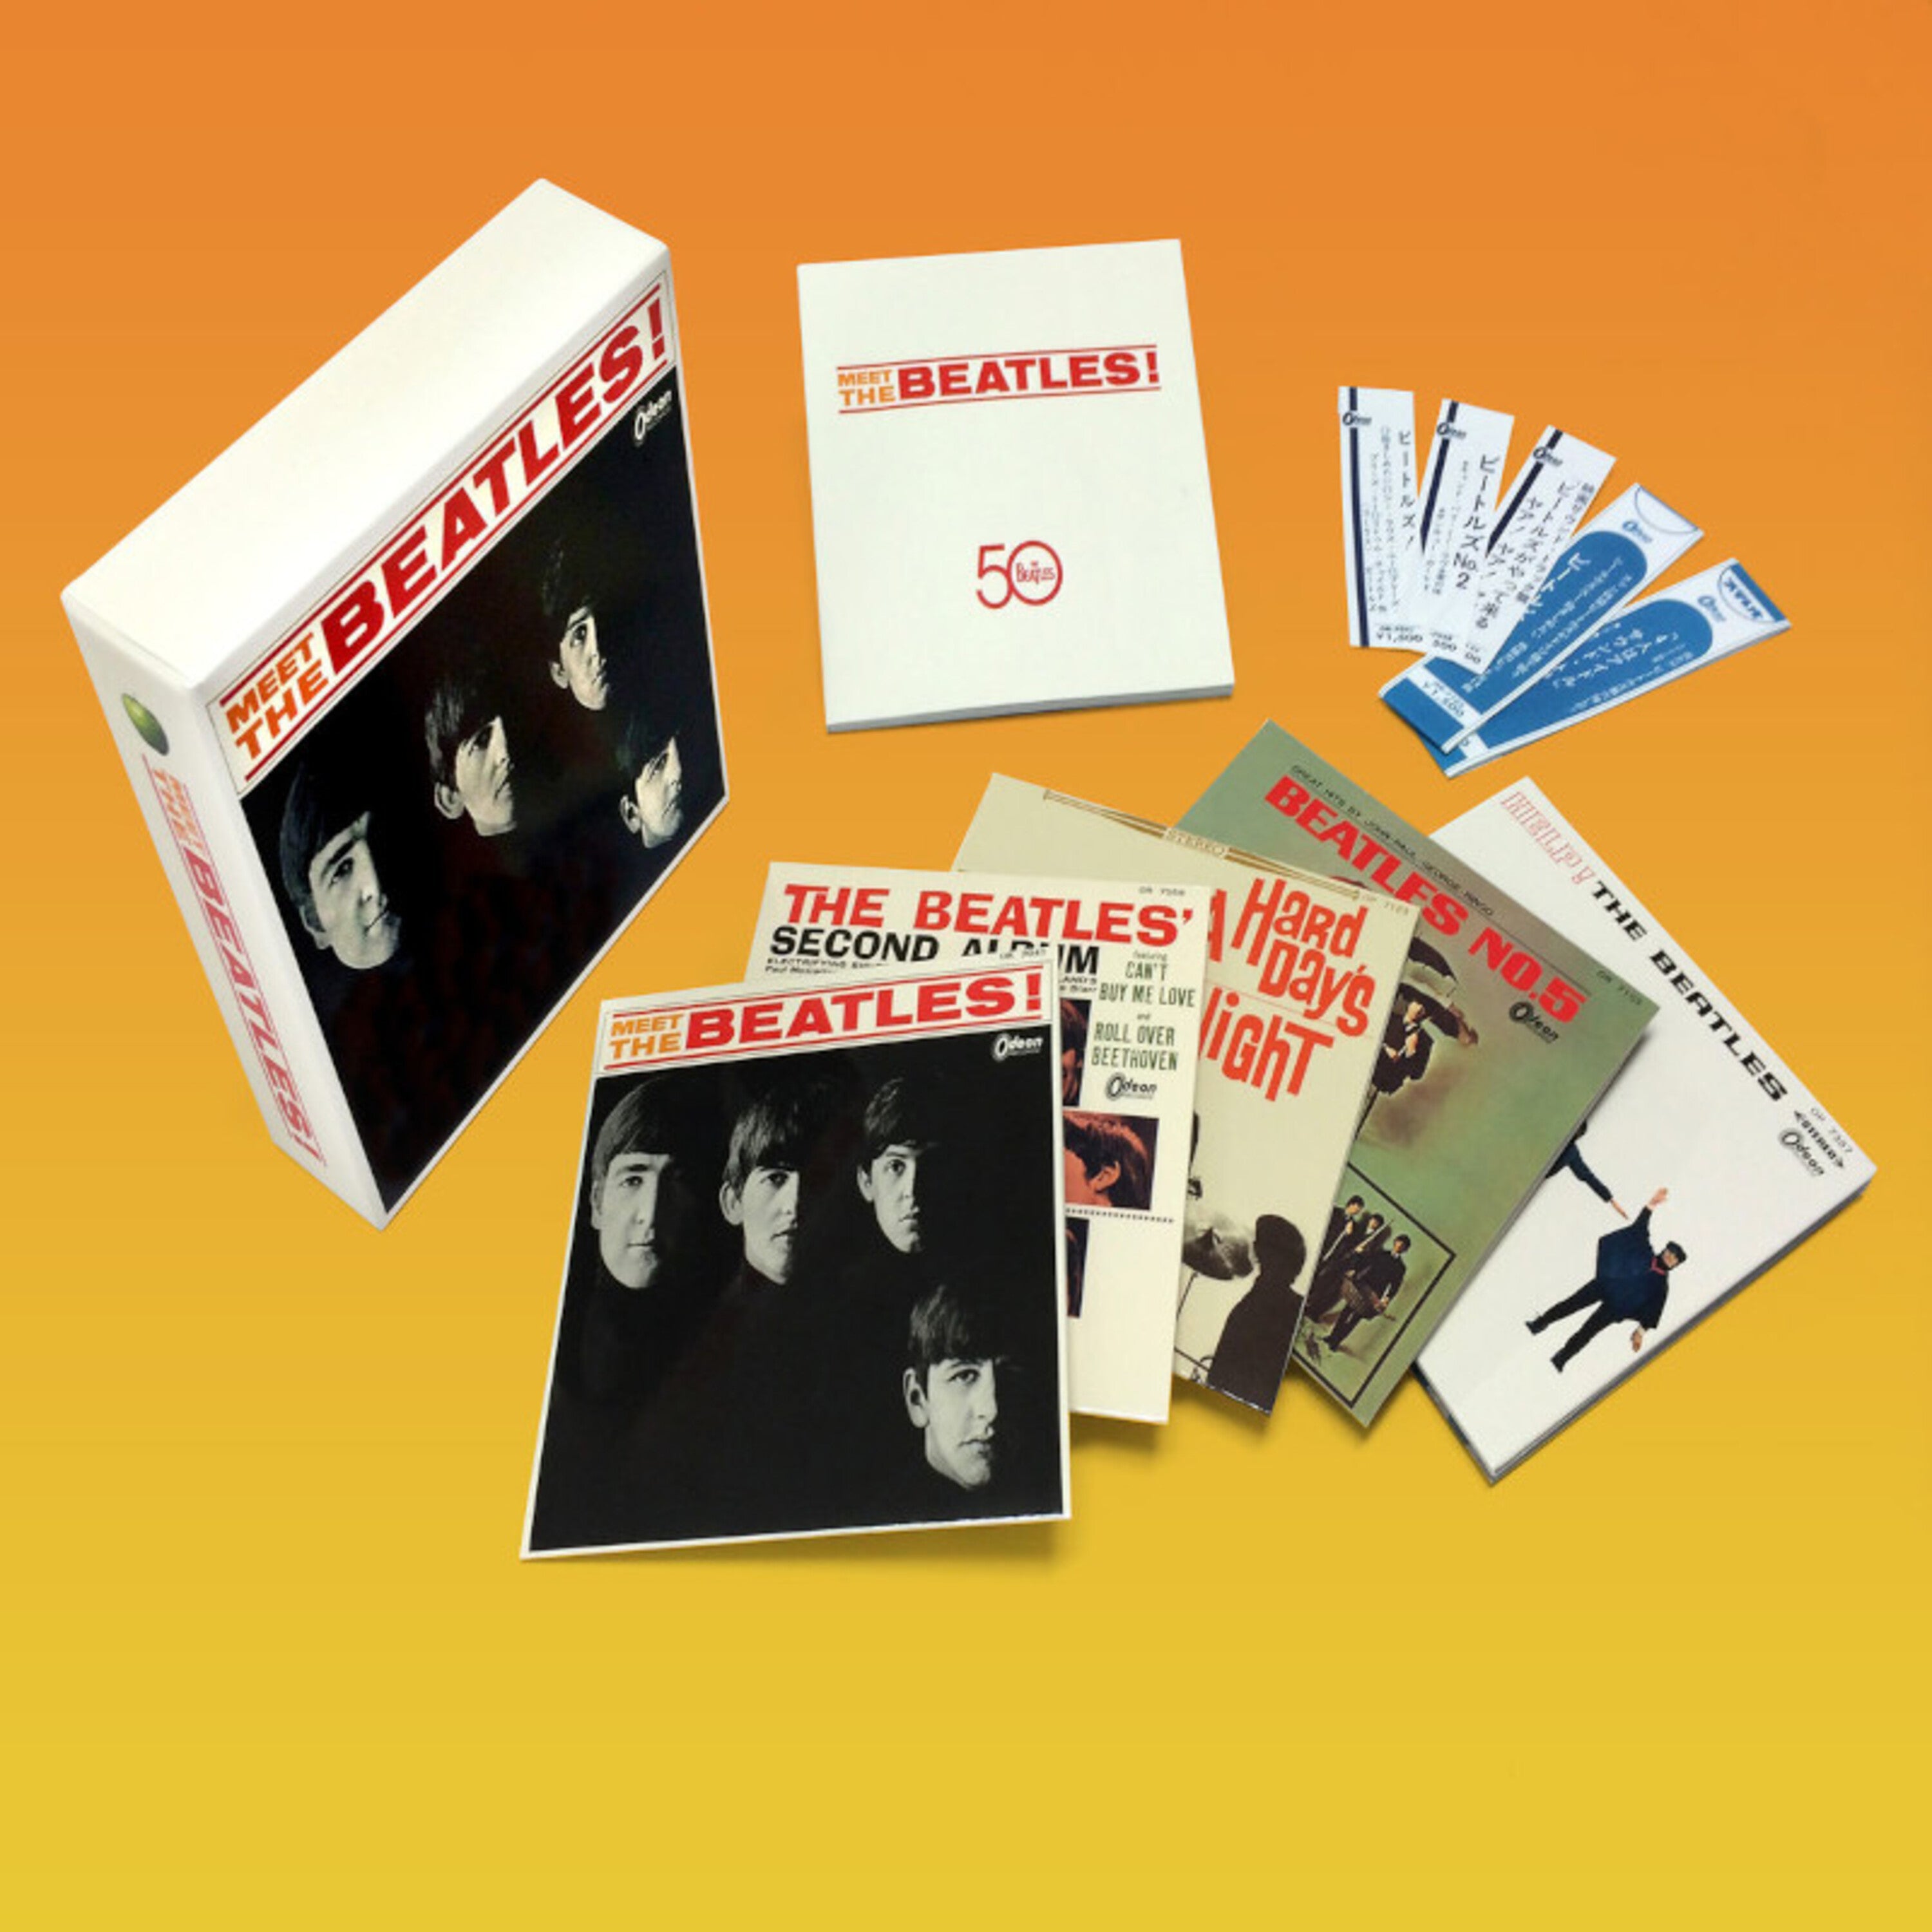 Meet The Beatles! The Japan Box - The Beatles